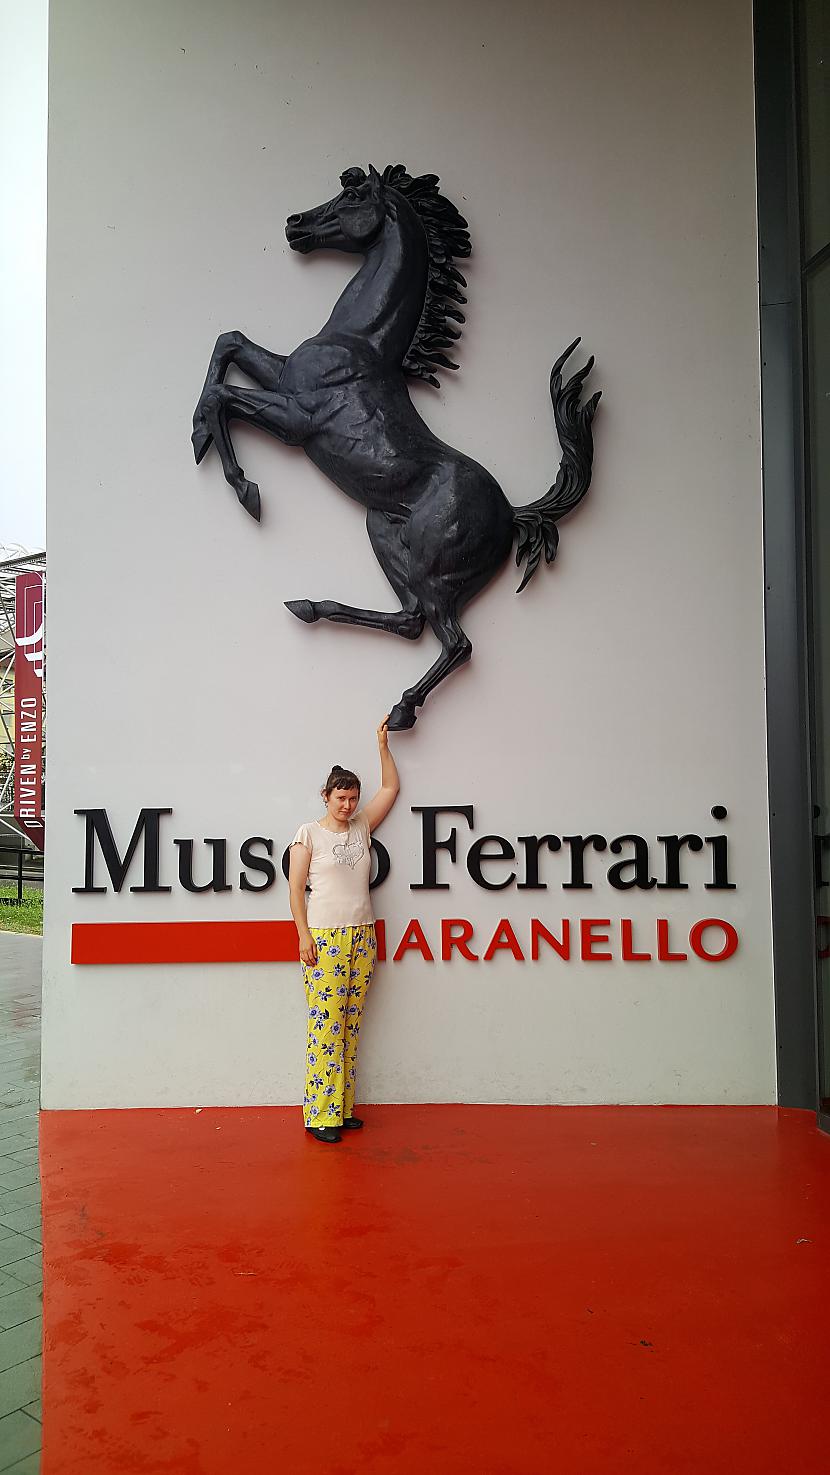 Pie ieejas muzejā Autors: Santa Sudakova Ferrari muzejs Maranello.